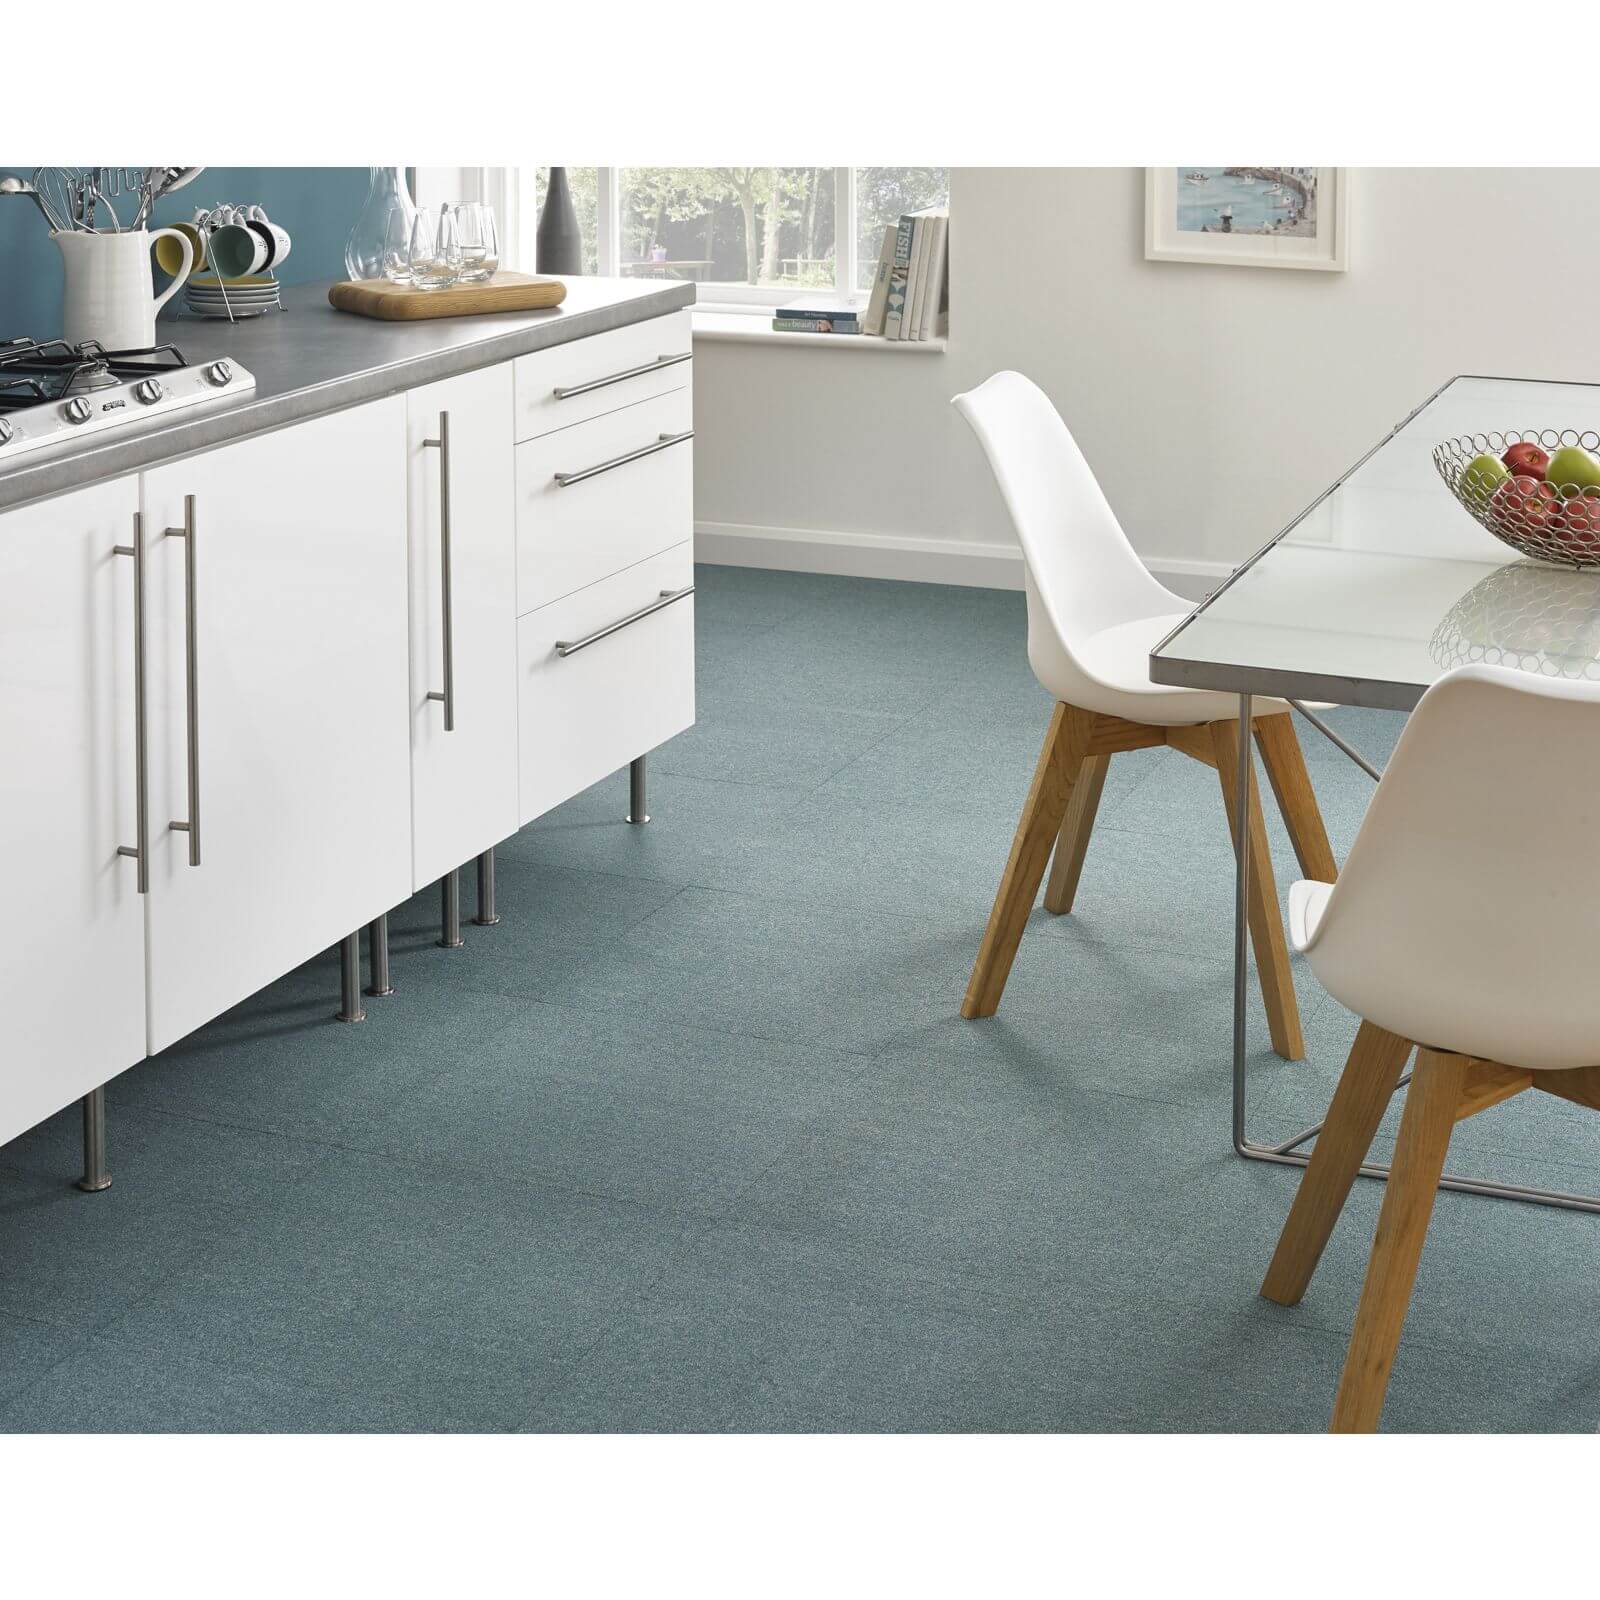 Vitrex Premium Carpet Tile 500 x500mm -  Teal